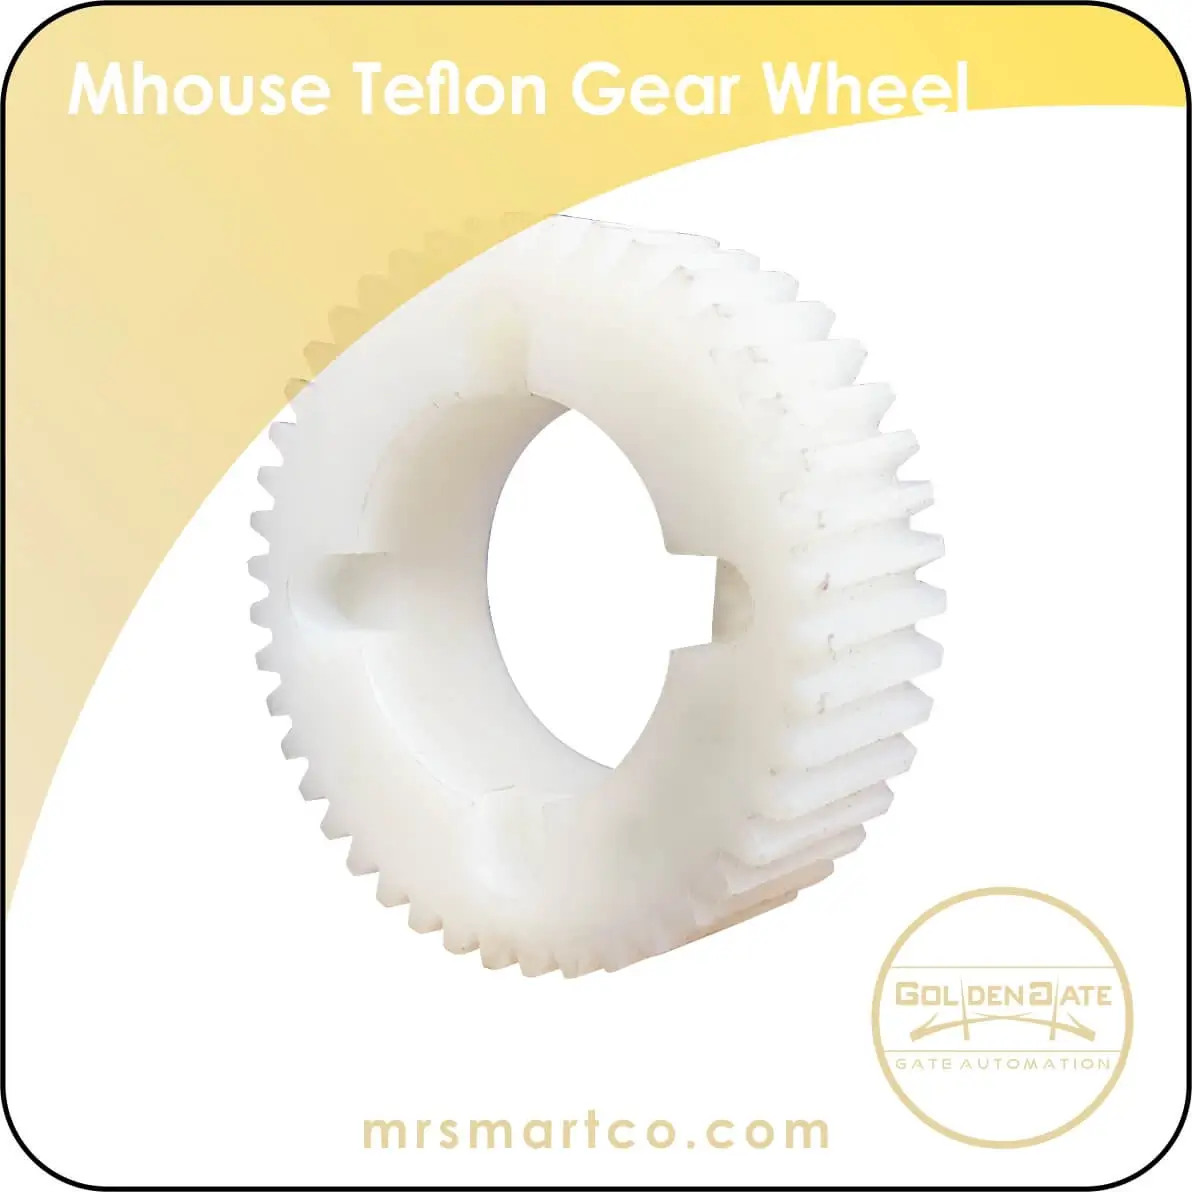 Mhouse Teflon Gear Wheel